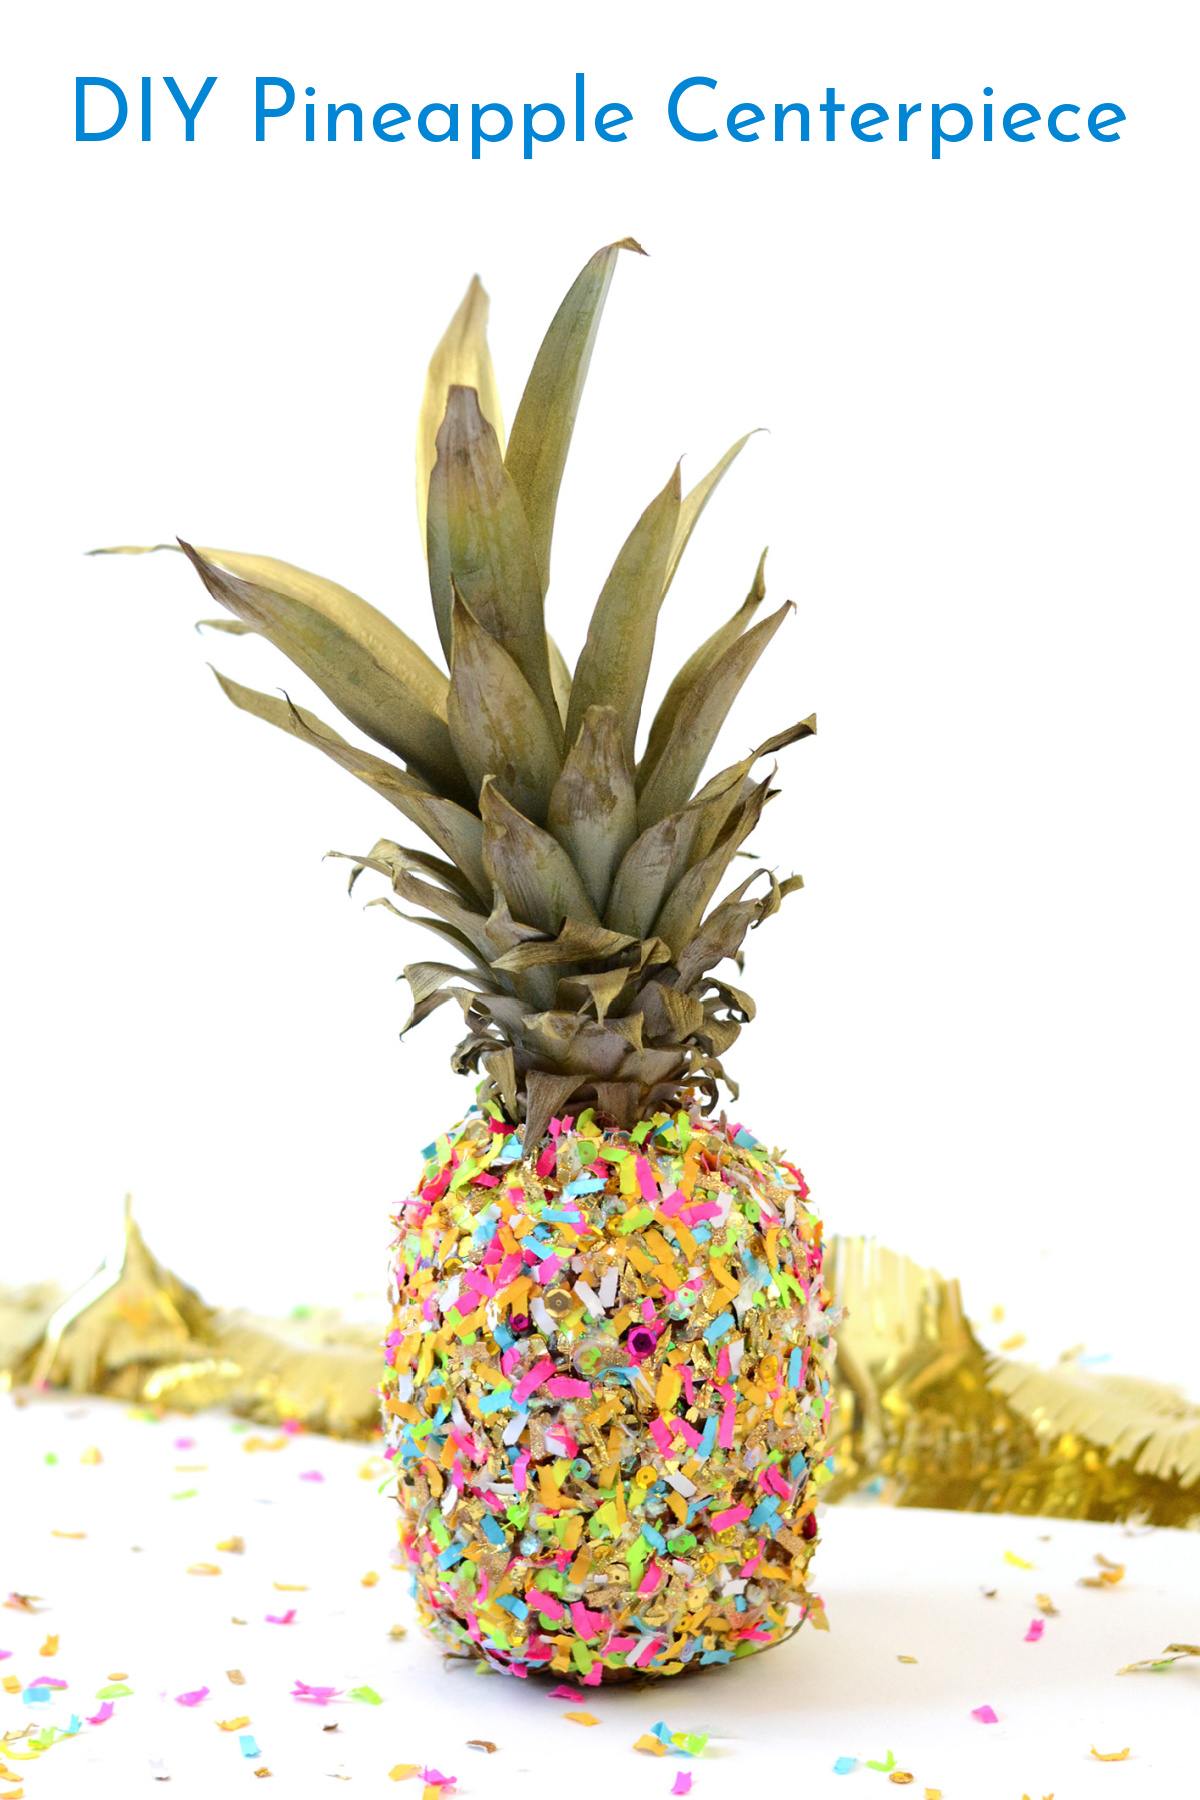 DIY pineapple centerpiece